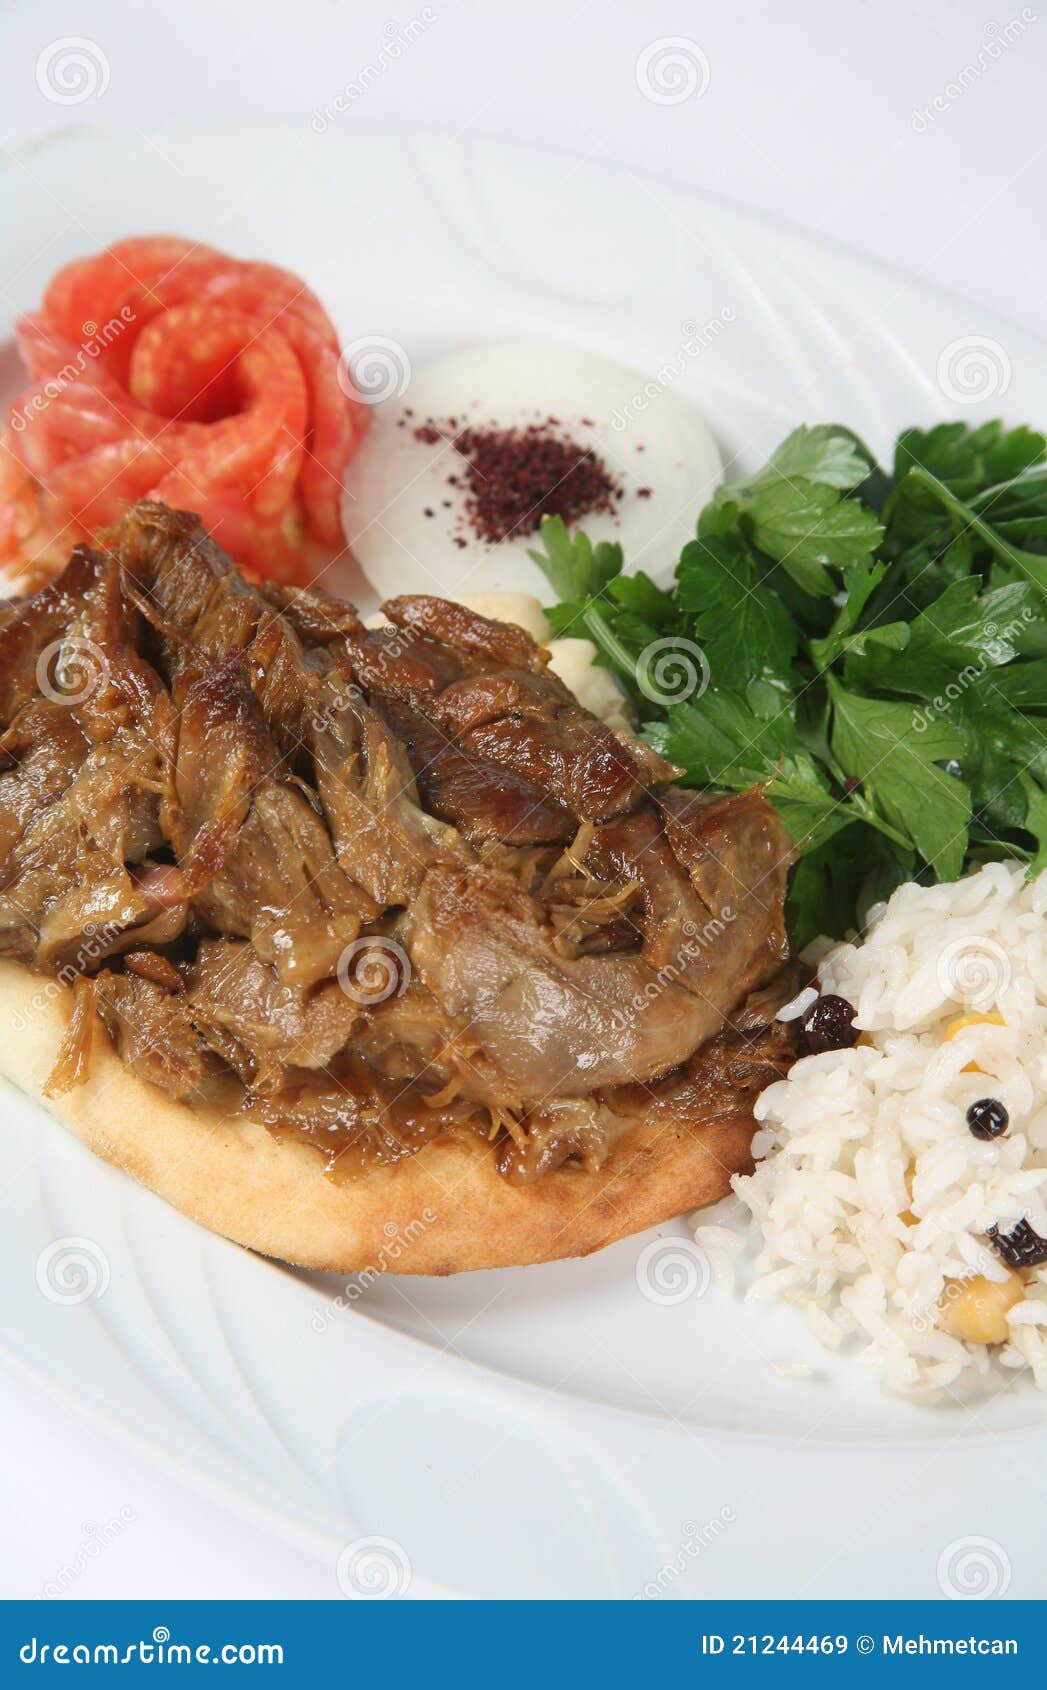 Turkish kebab stock image. Image of prepared, beef, bread - 21244469